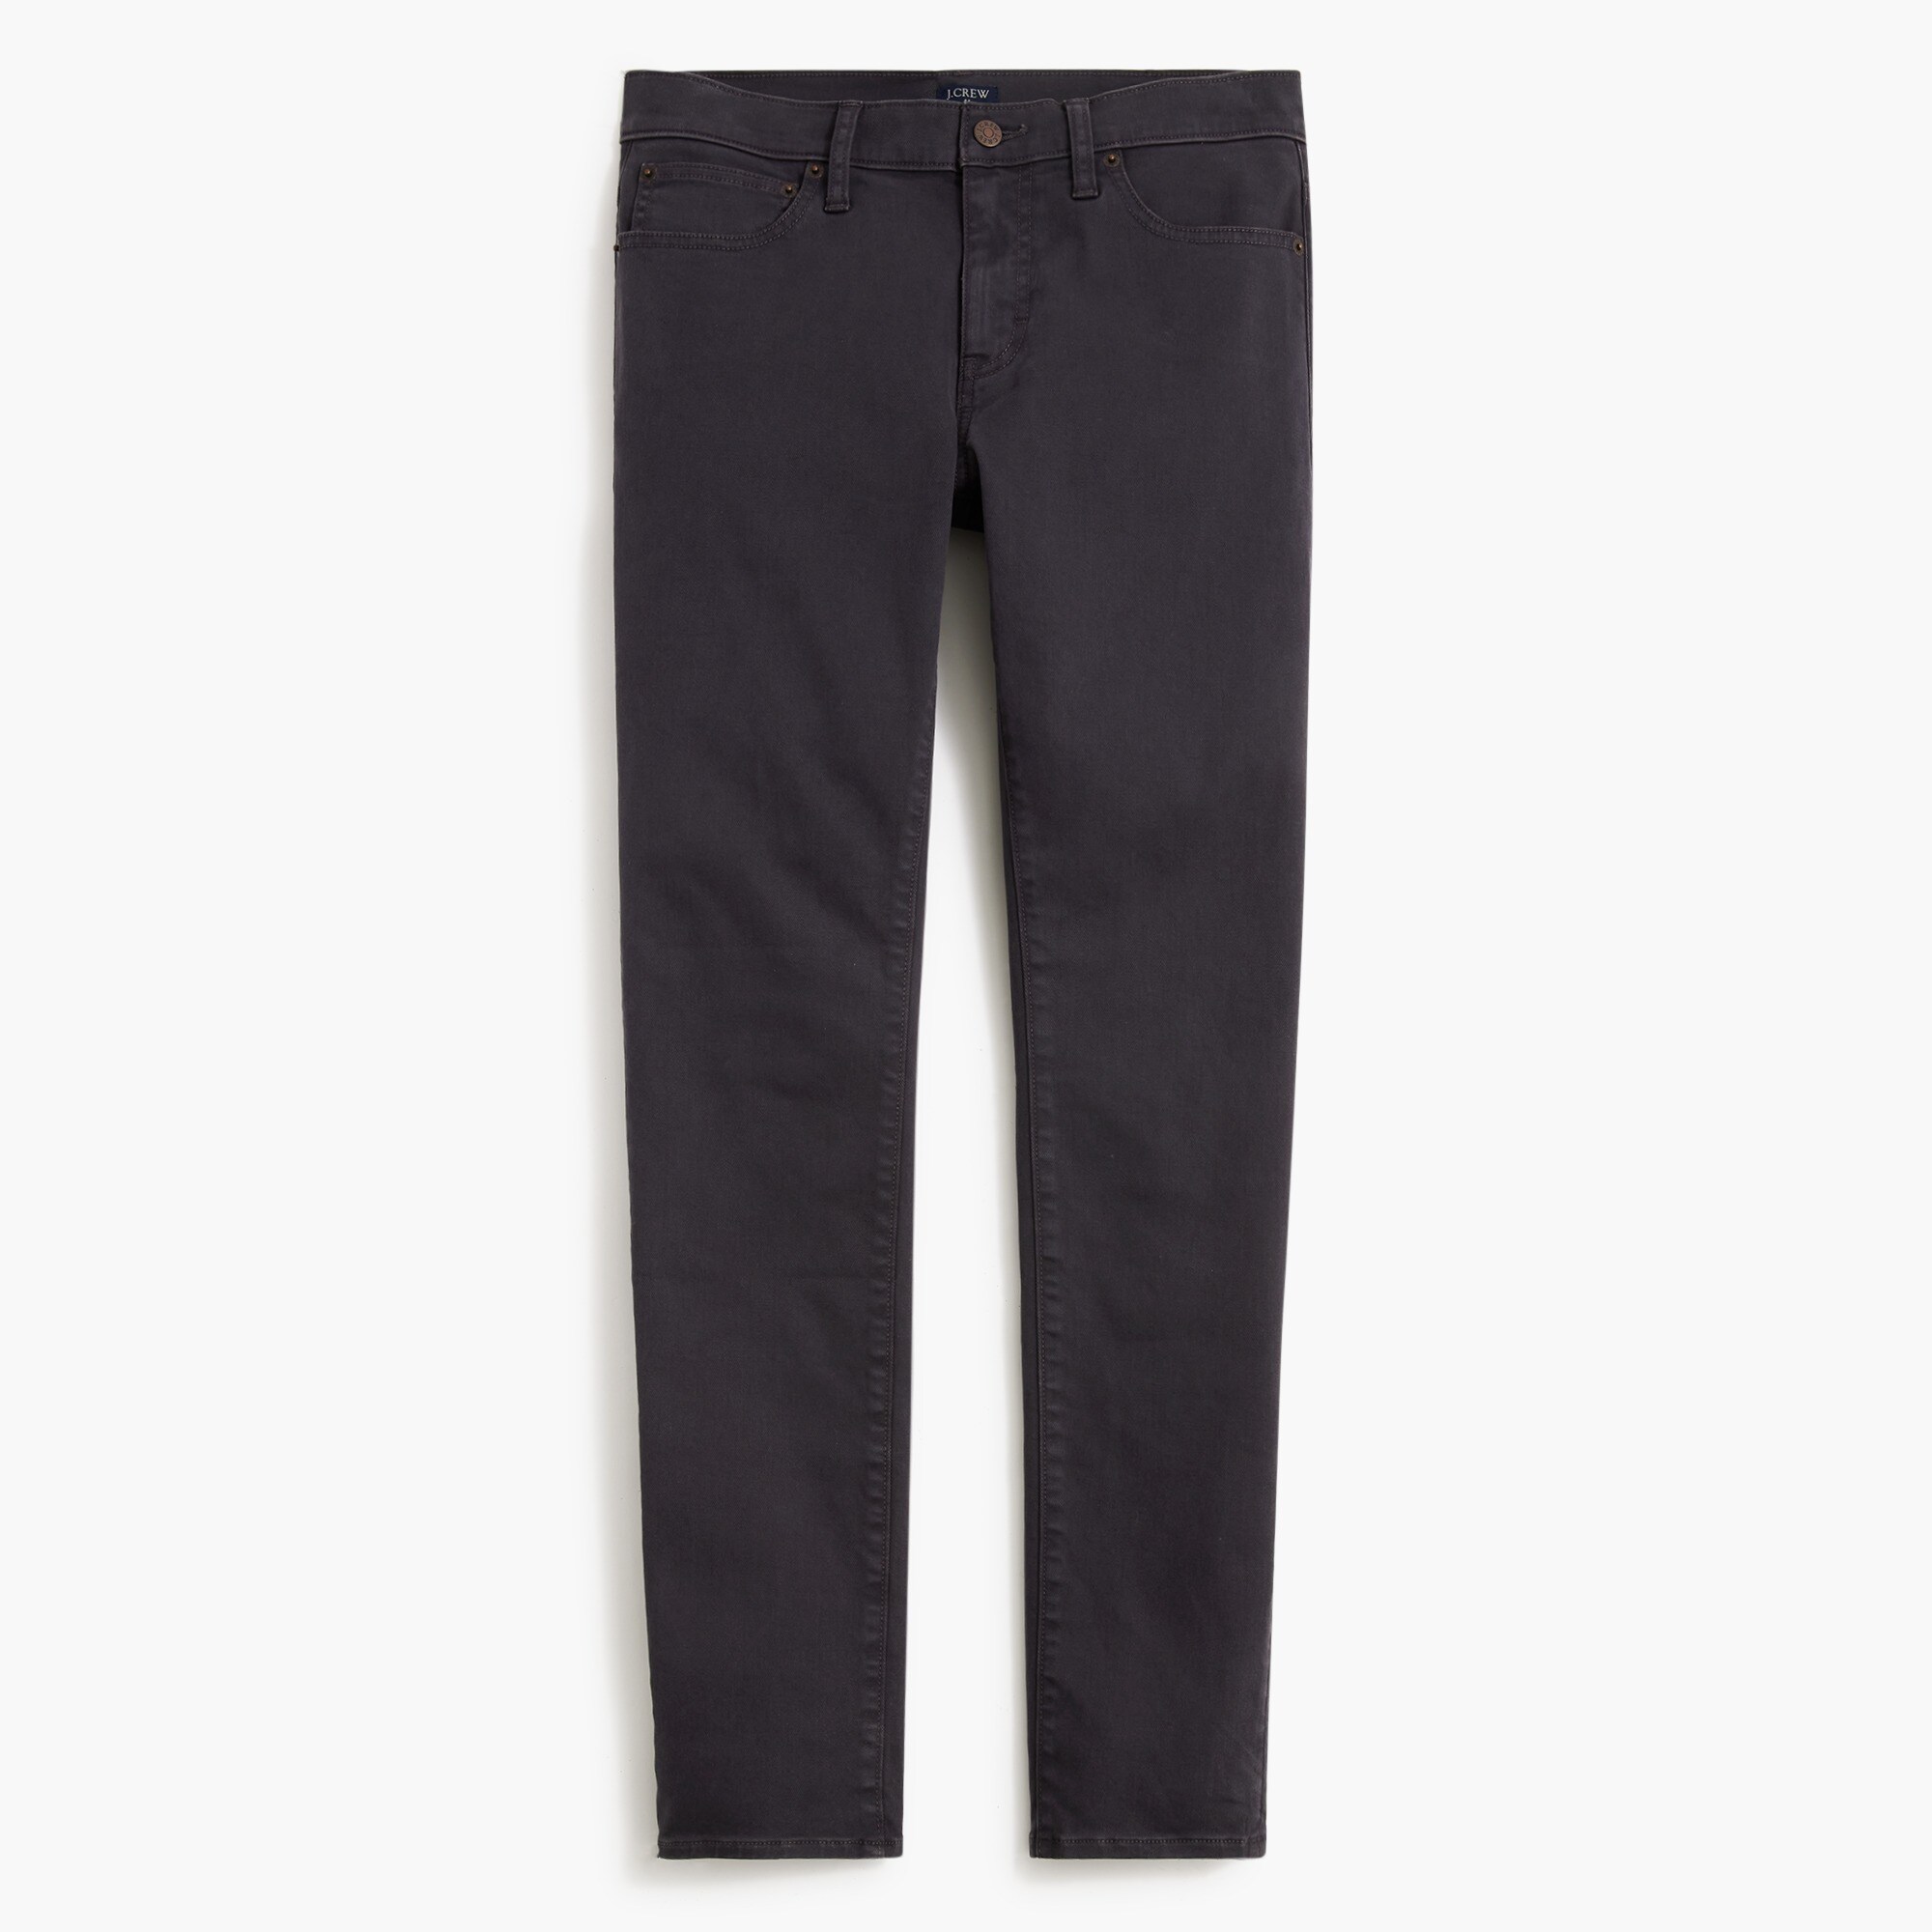  Slim-fit garment-dyed five-pocket pant